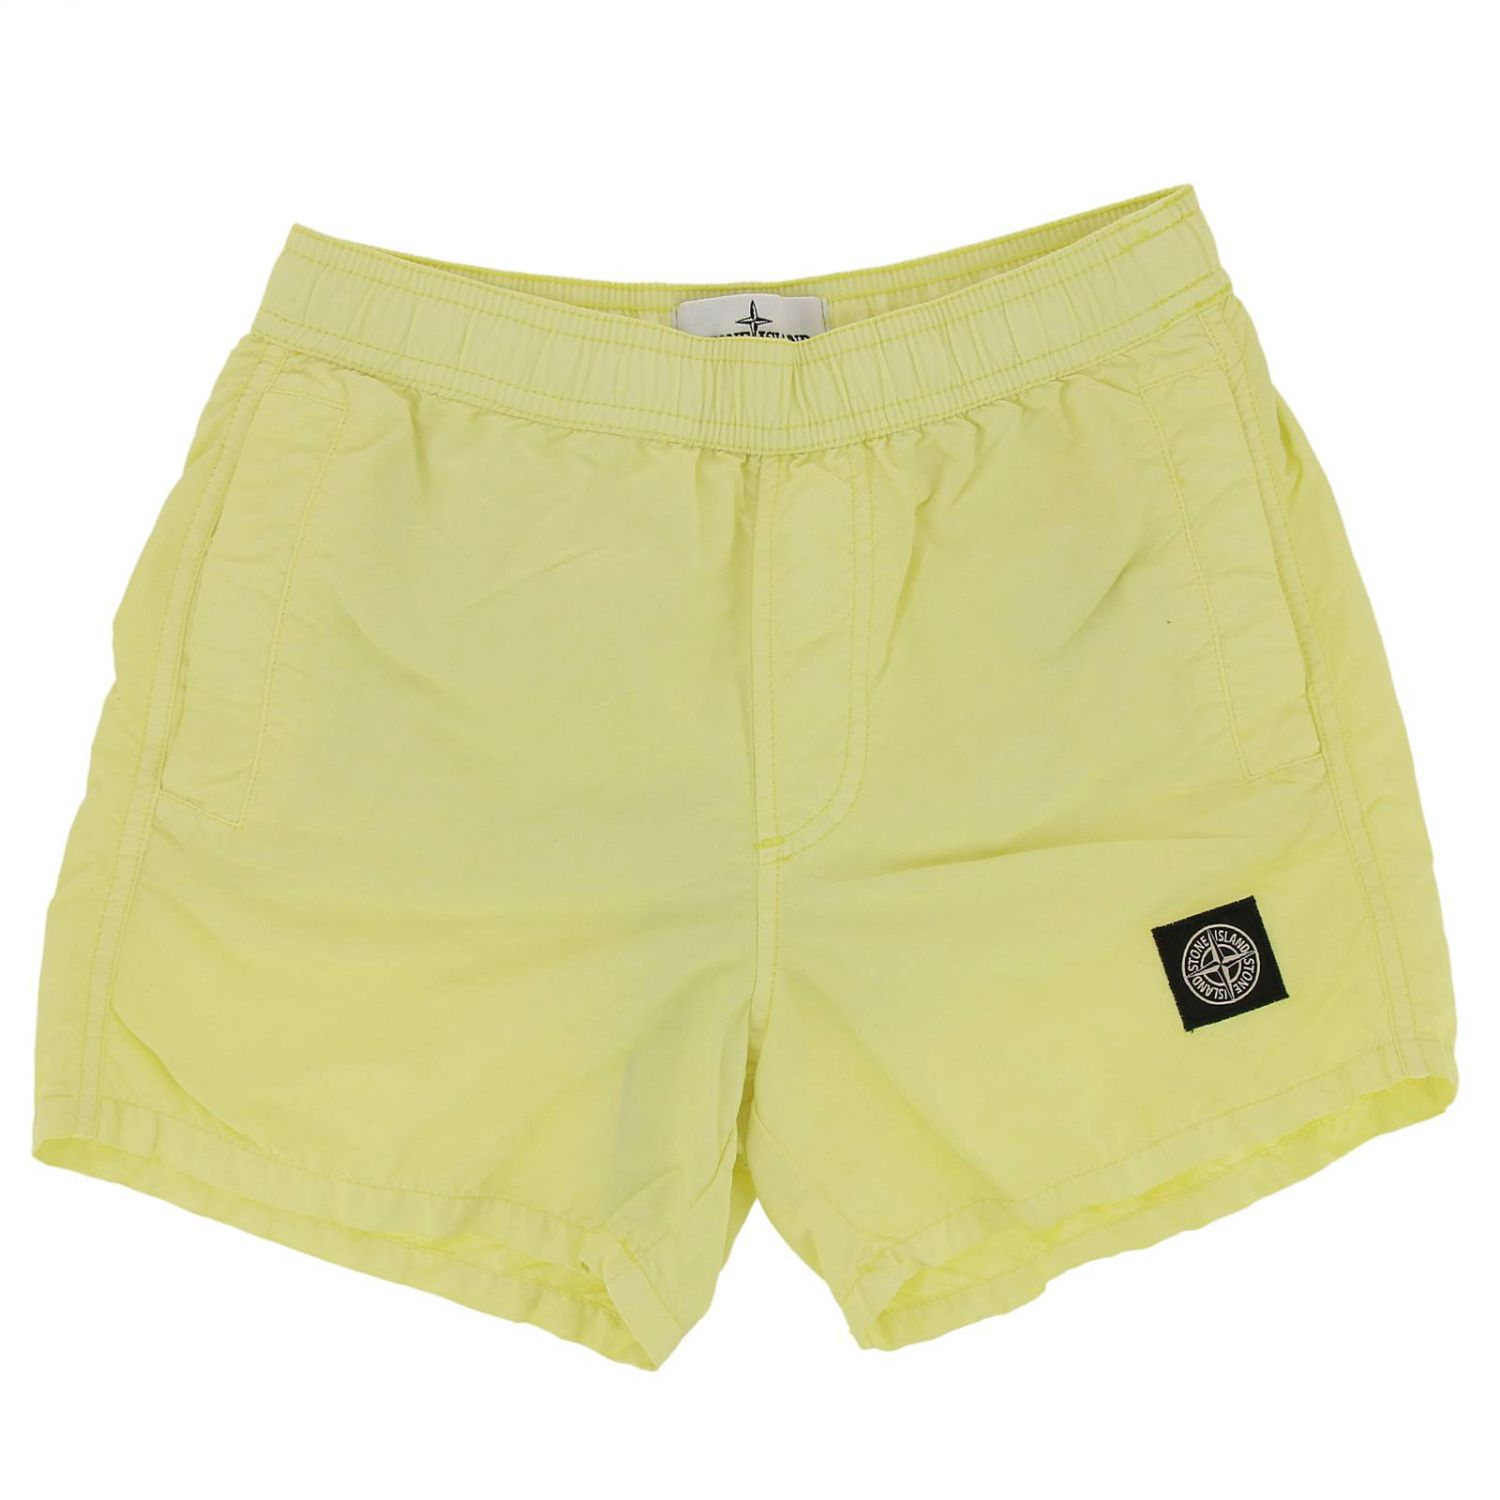 STONE ISLAND JUNIOR: Shorts kids Stone Island - Lemon | Shorts Stone ...